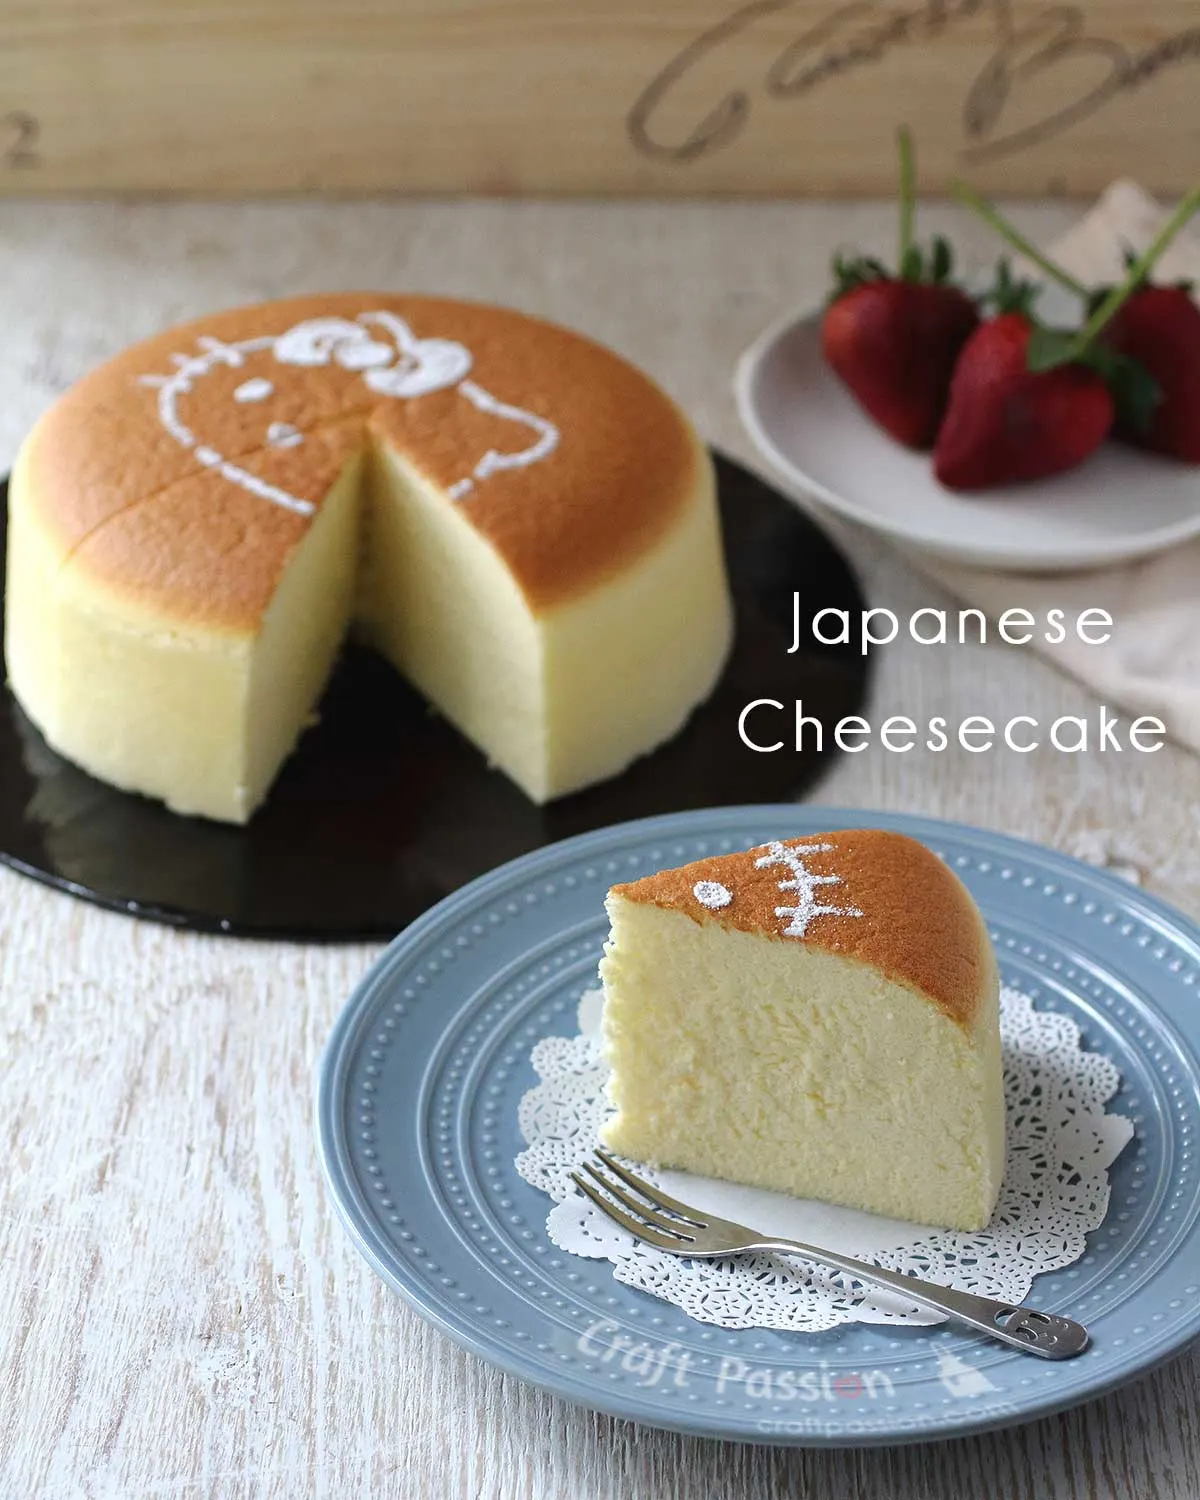 https://www.craftpassion.com/wp-content/uploads/japanese-cheesecake-1200.jpg.webp